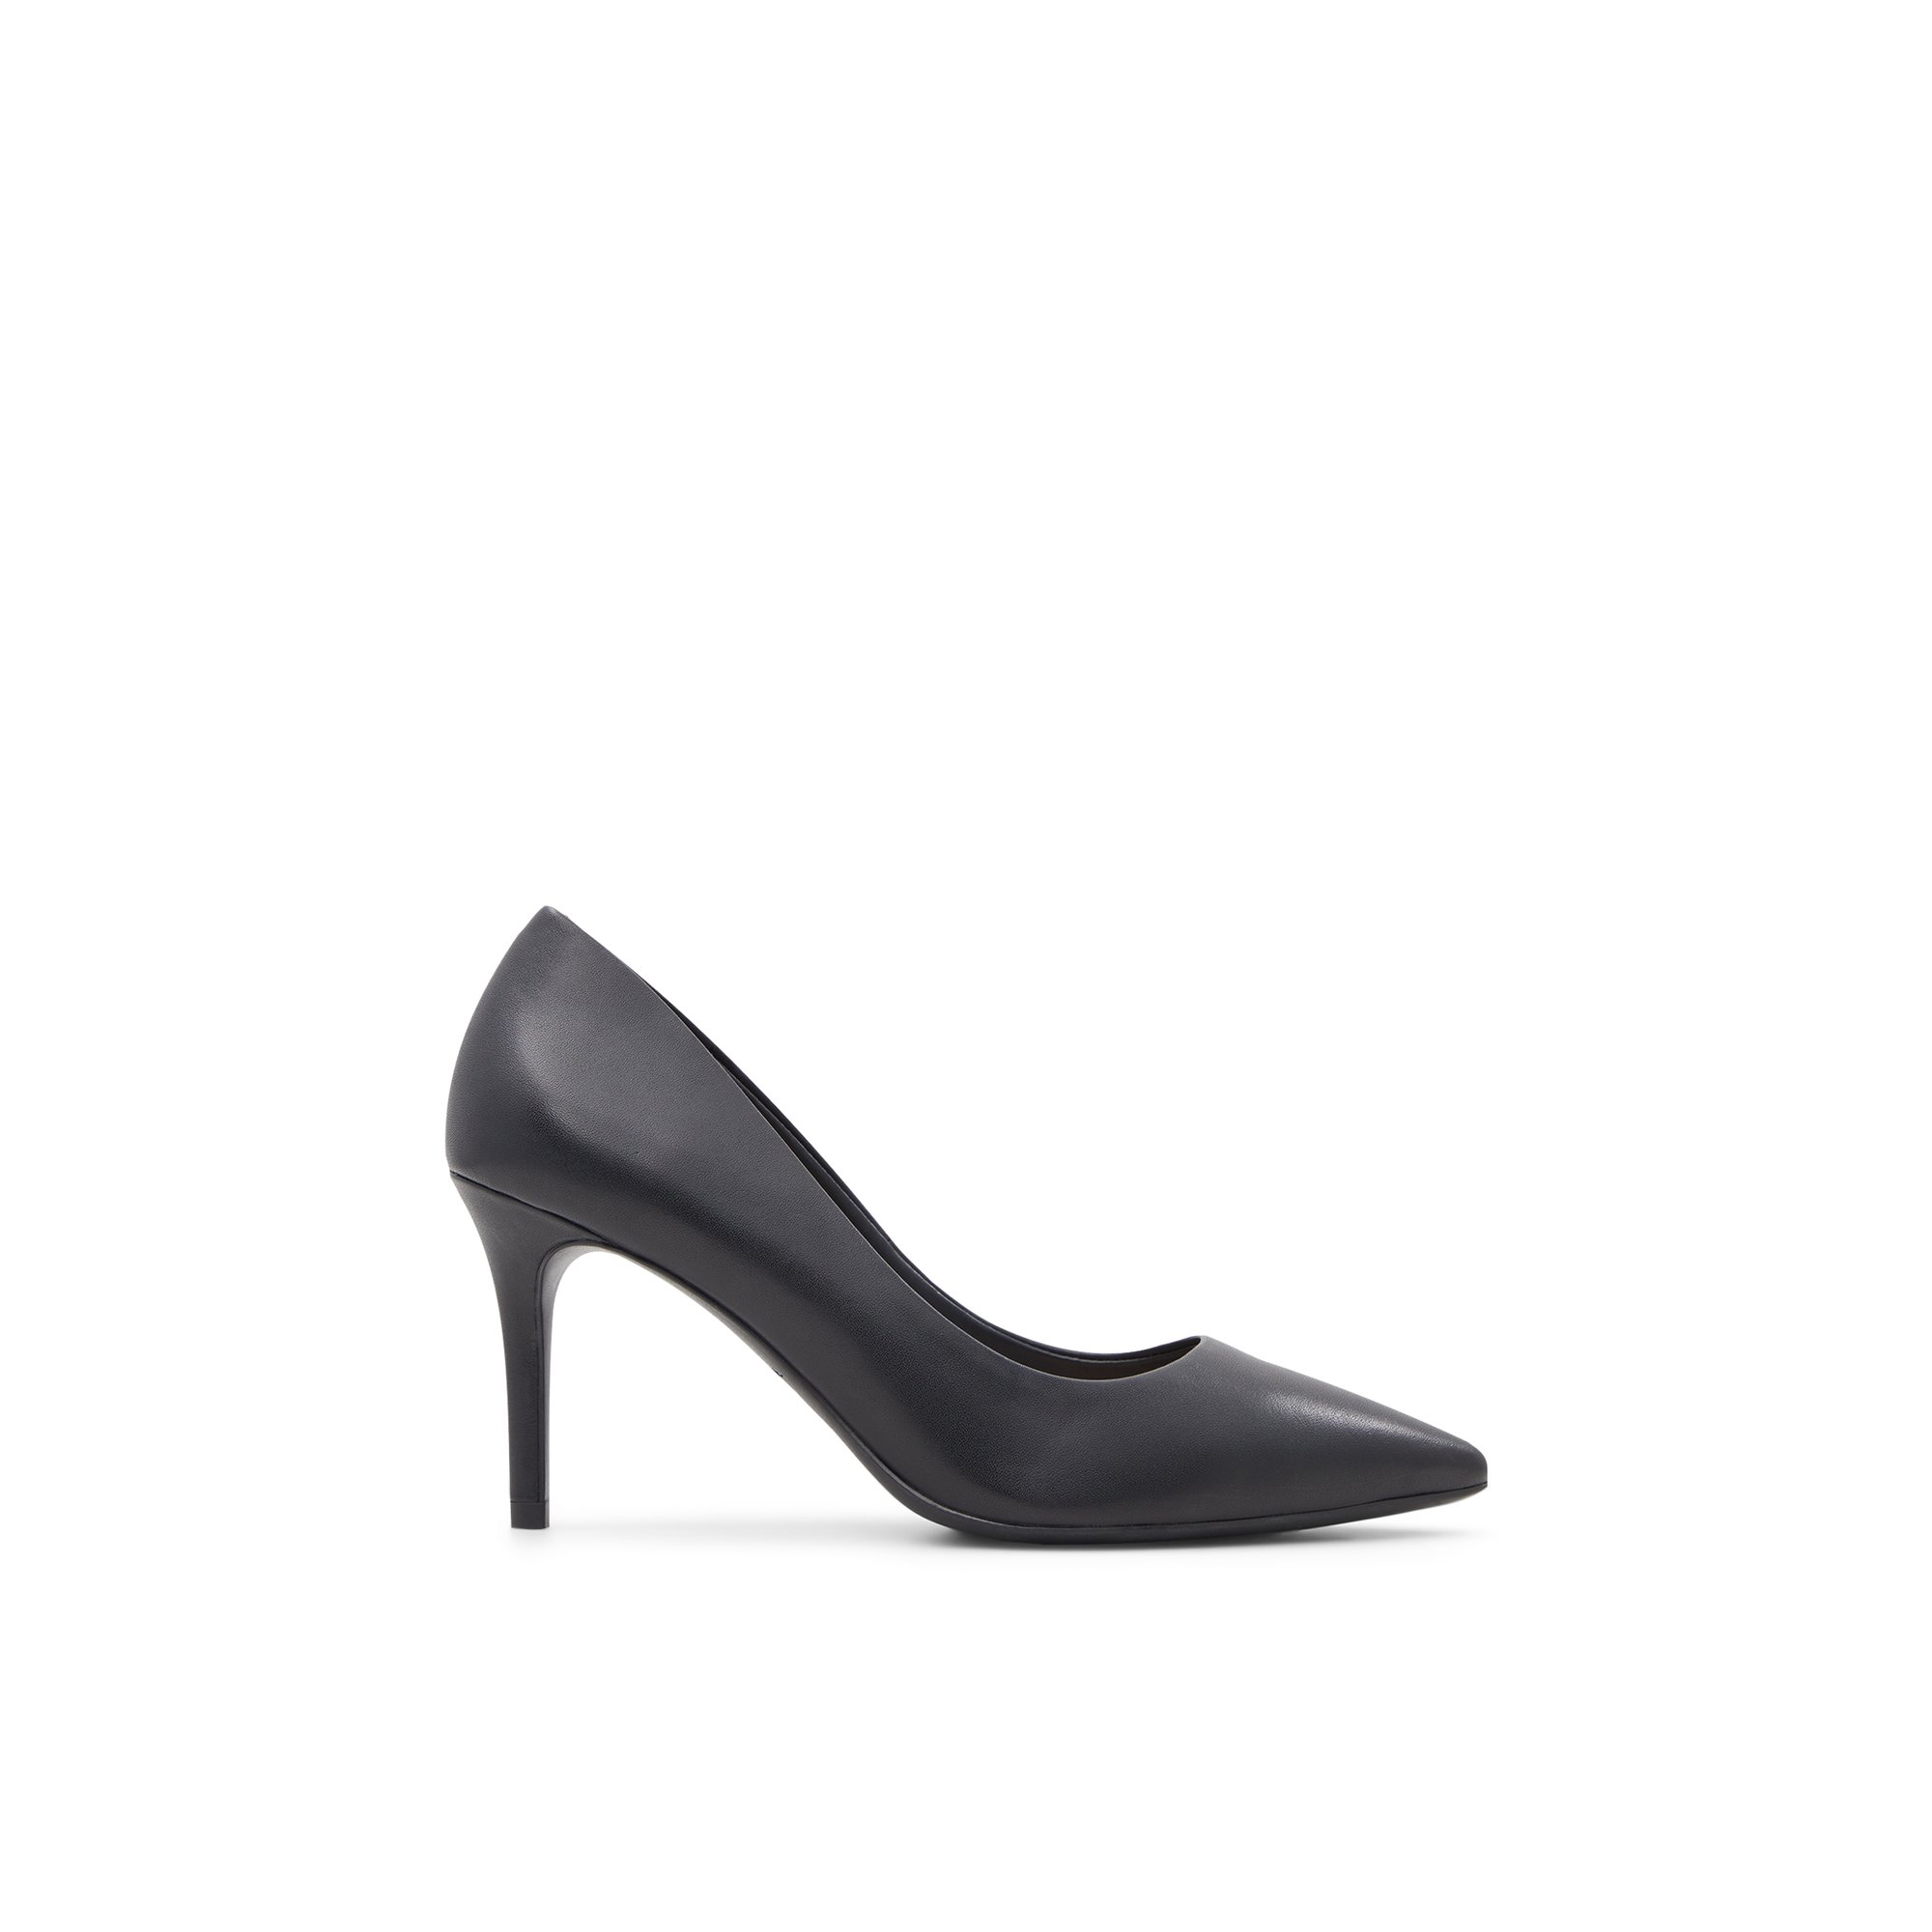 ALDO Sereniti - Women's Heels Pumps - Black